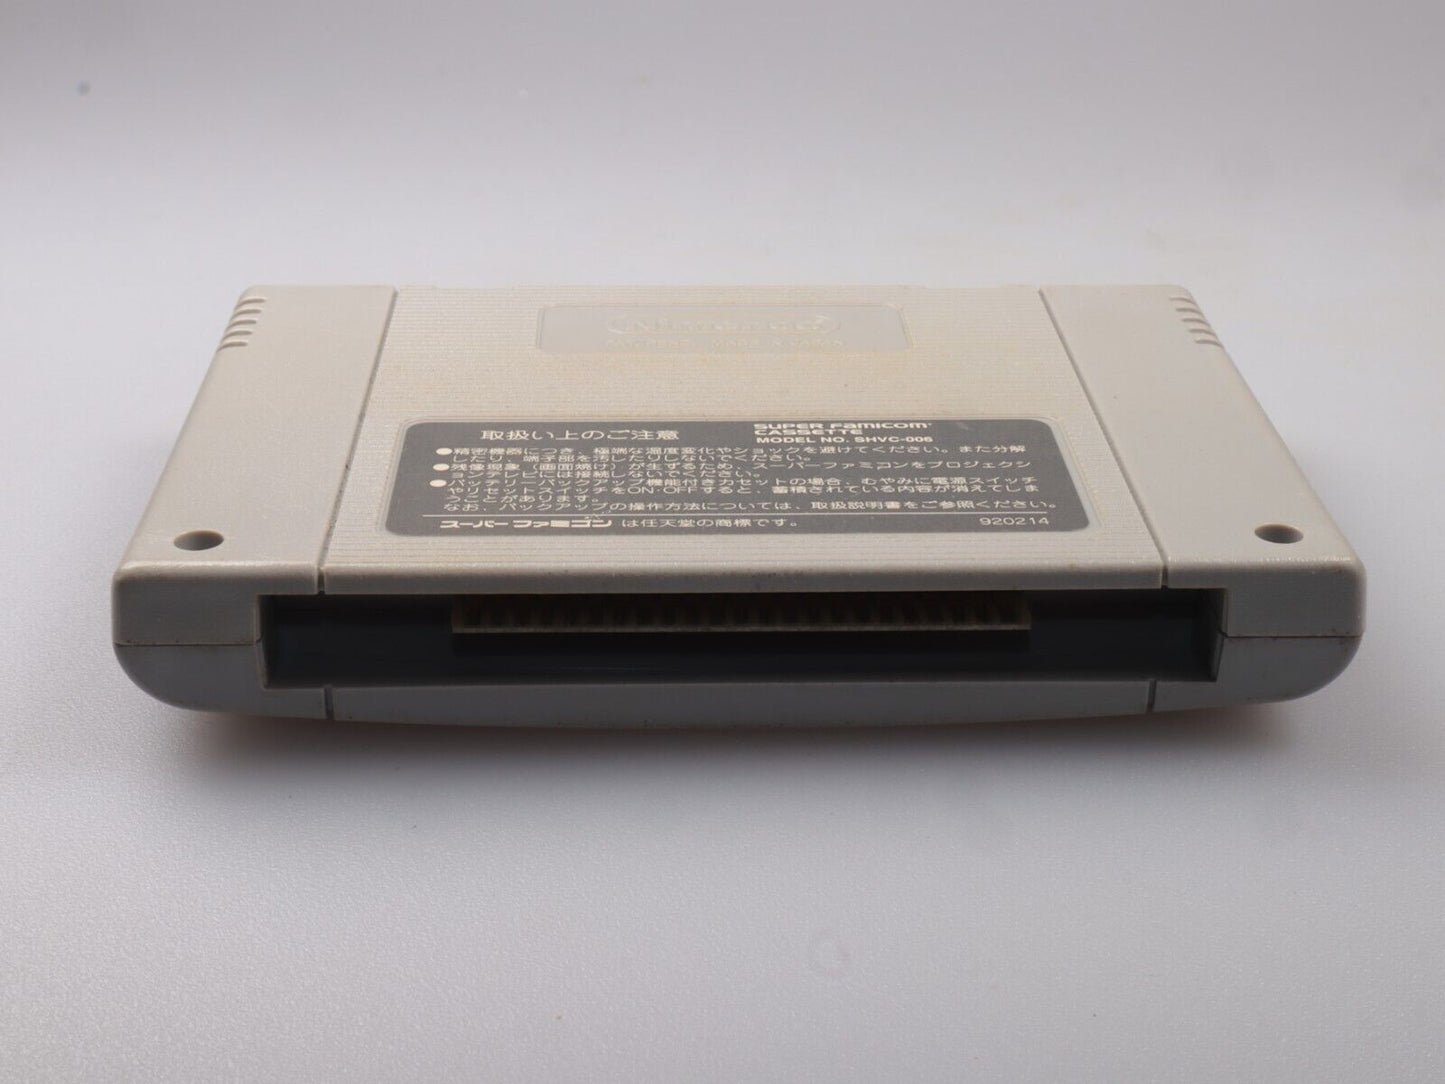 SNES | Super Famista 2 | JAP | Nintendo Nes Cartridge